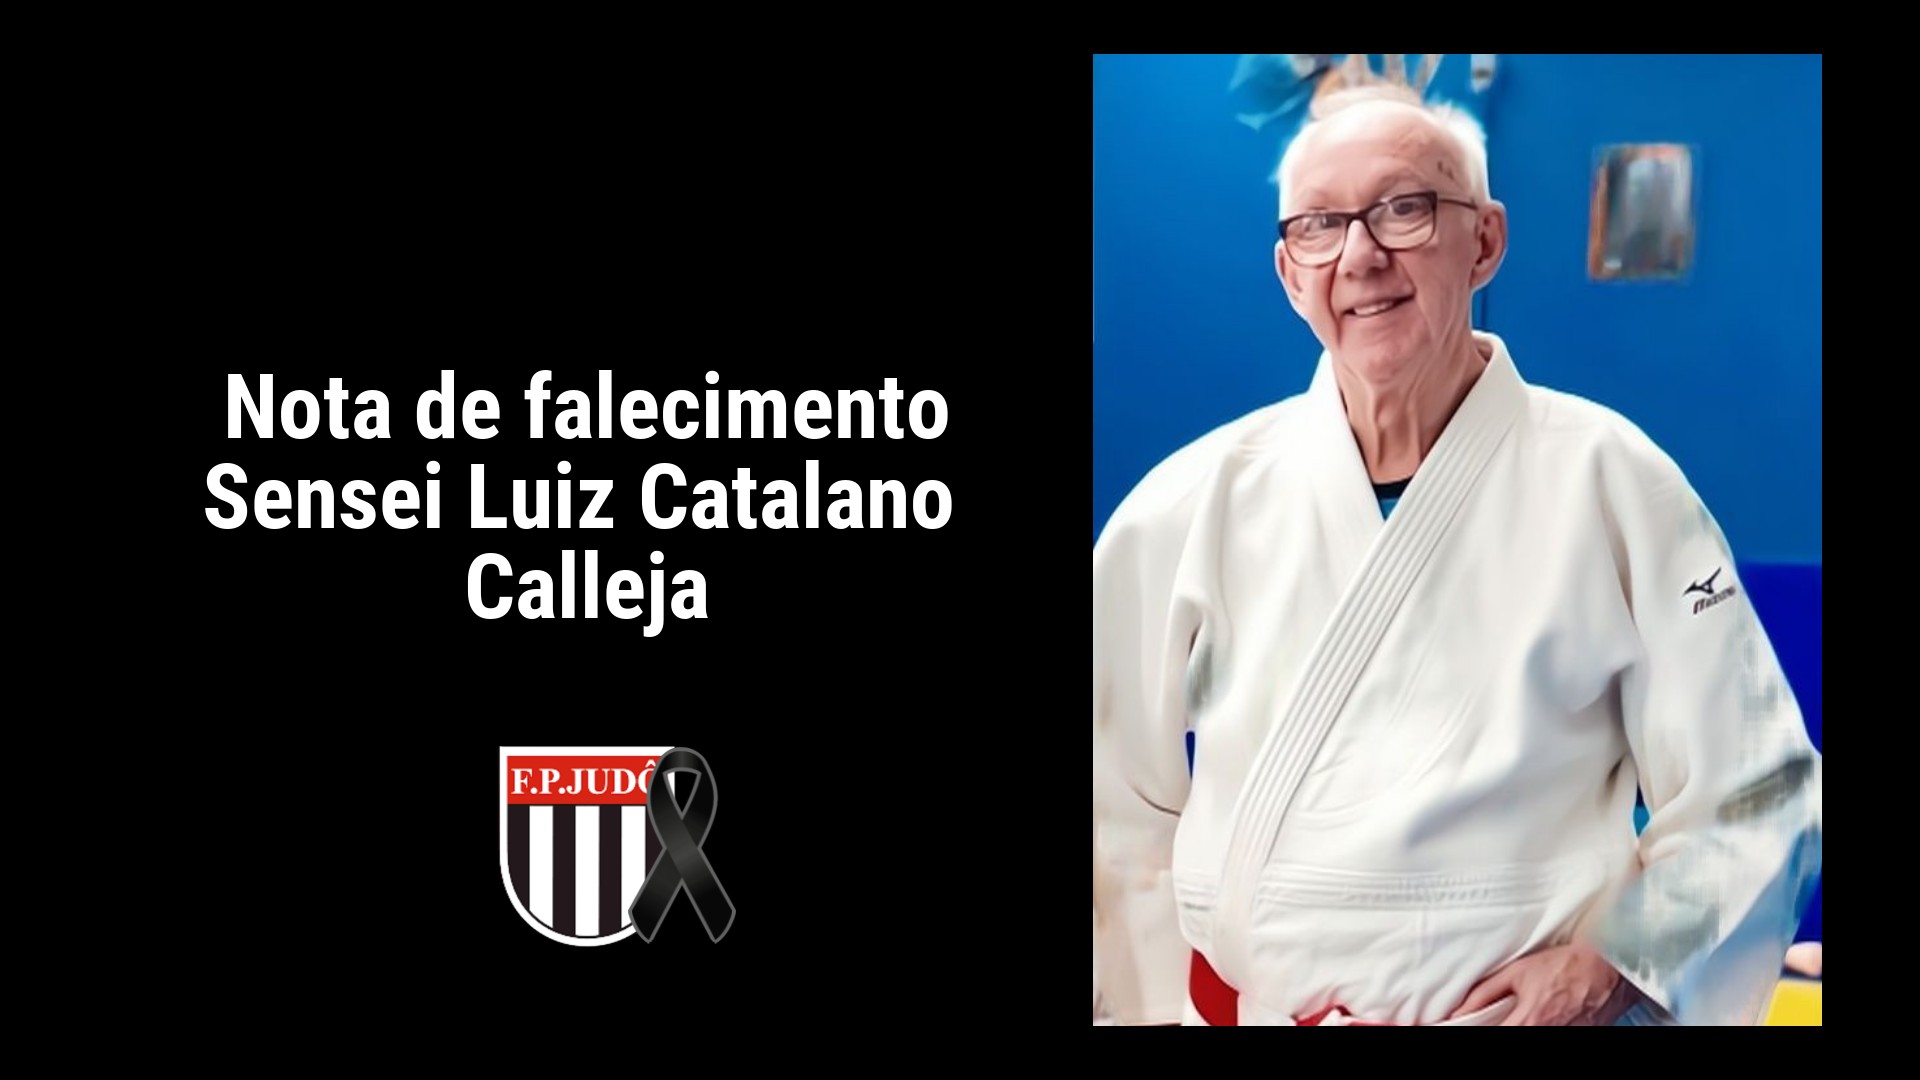 Sensei Luiz Catalano Calleja